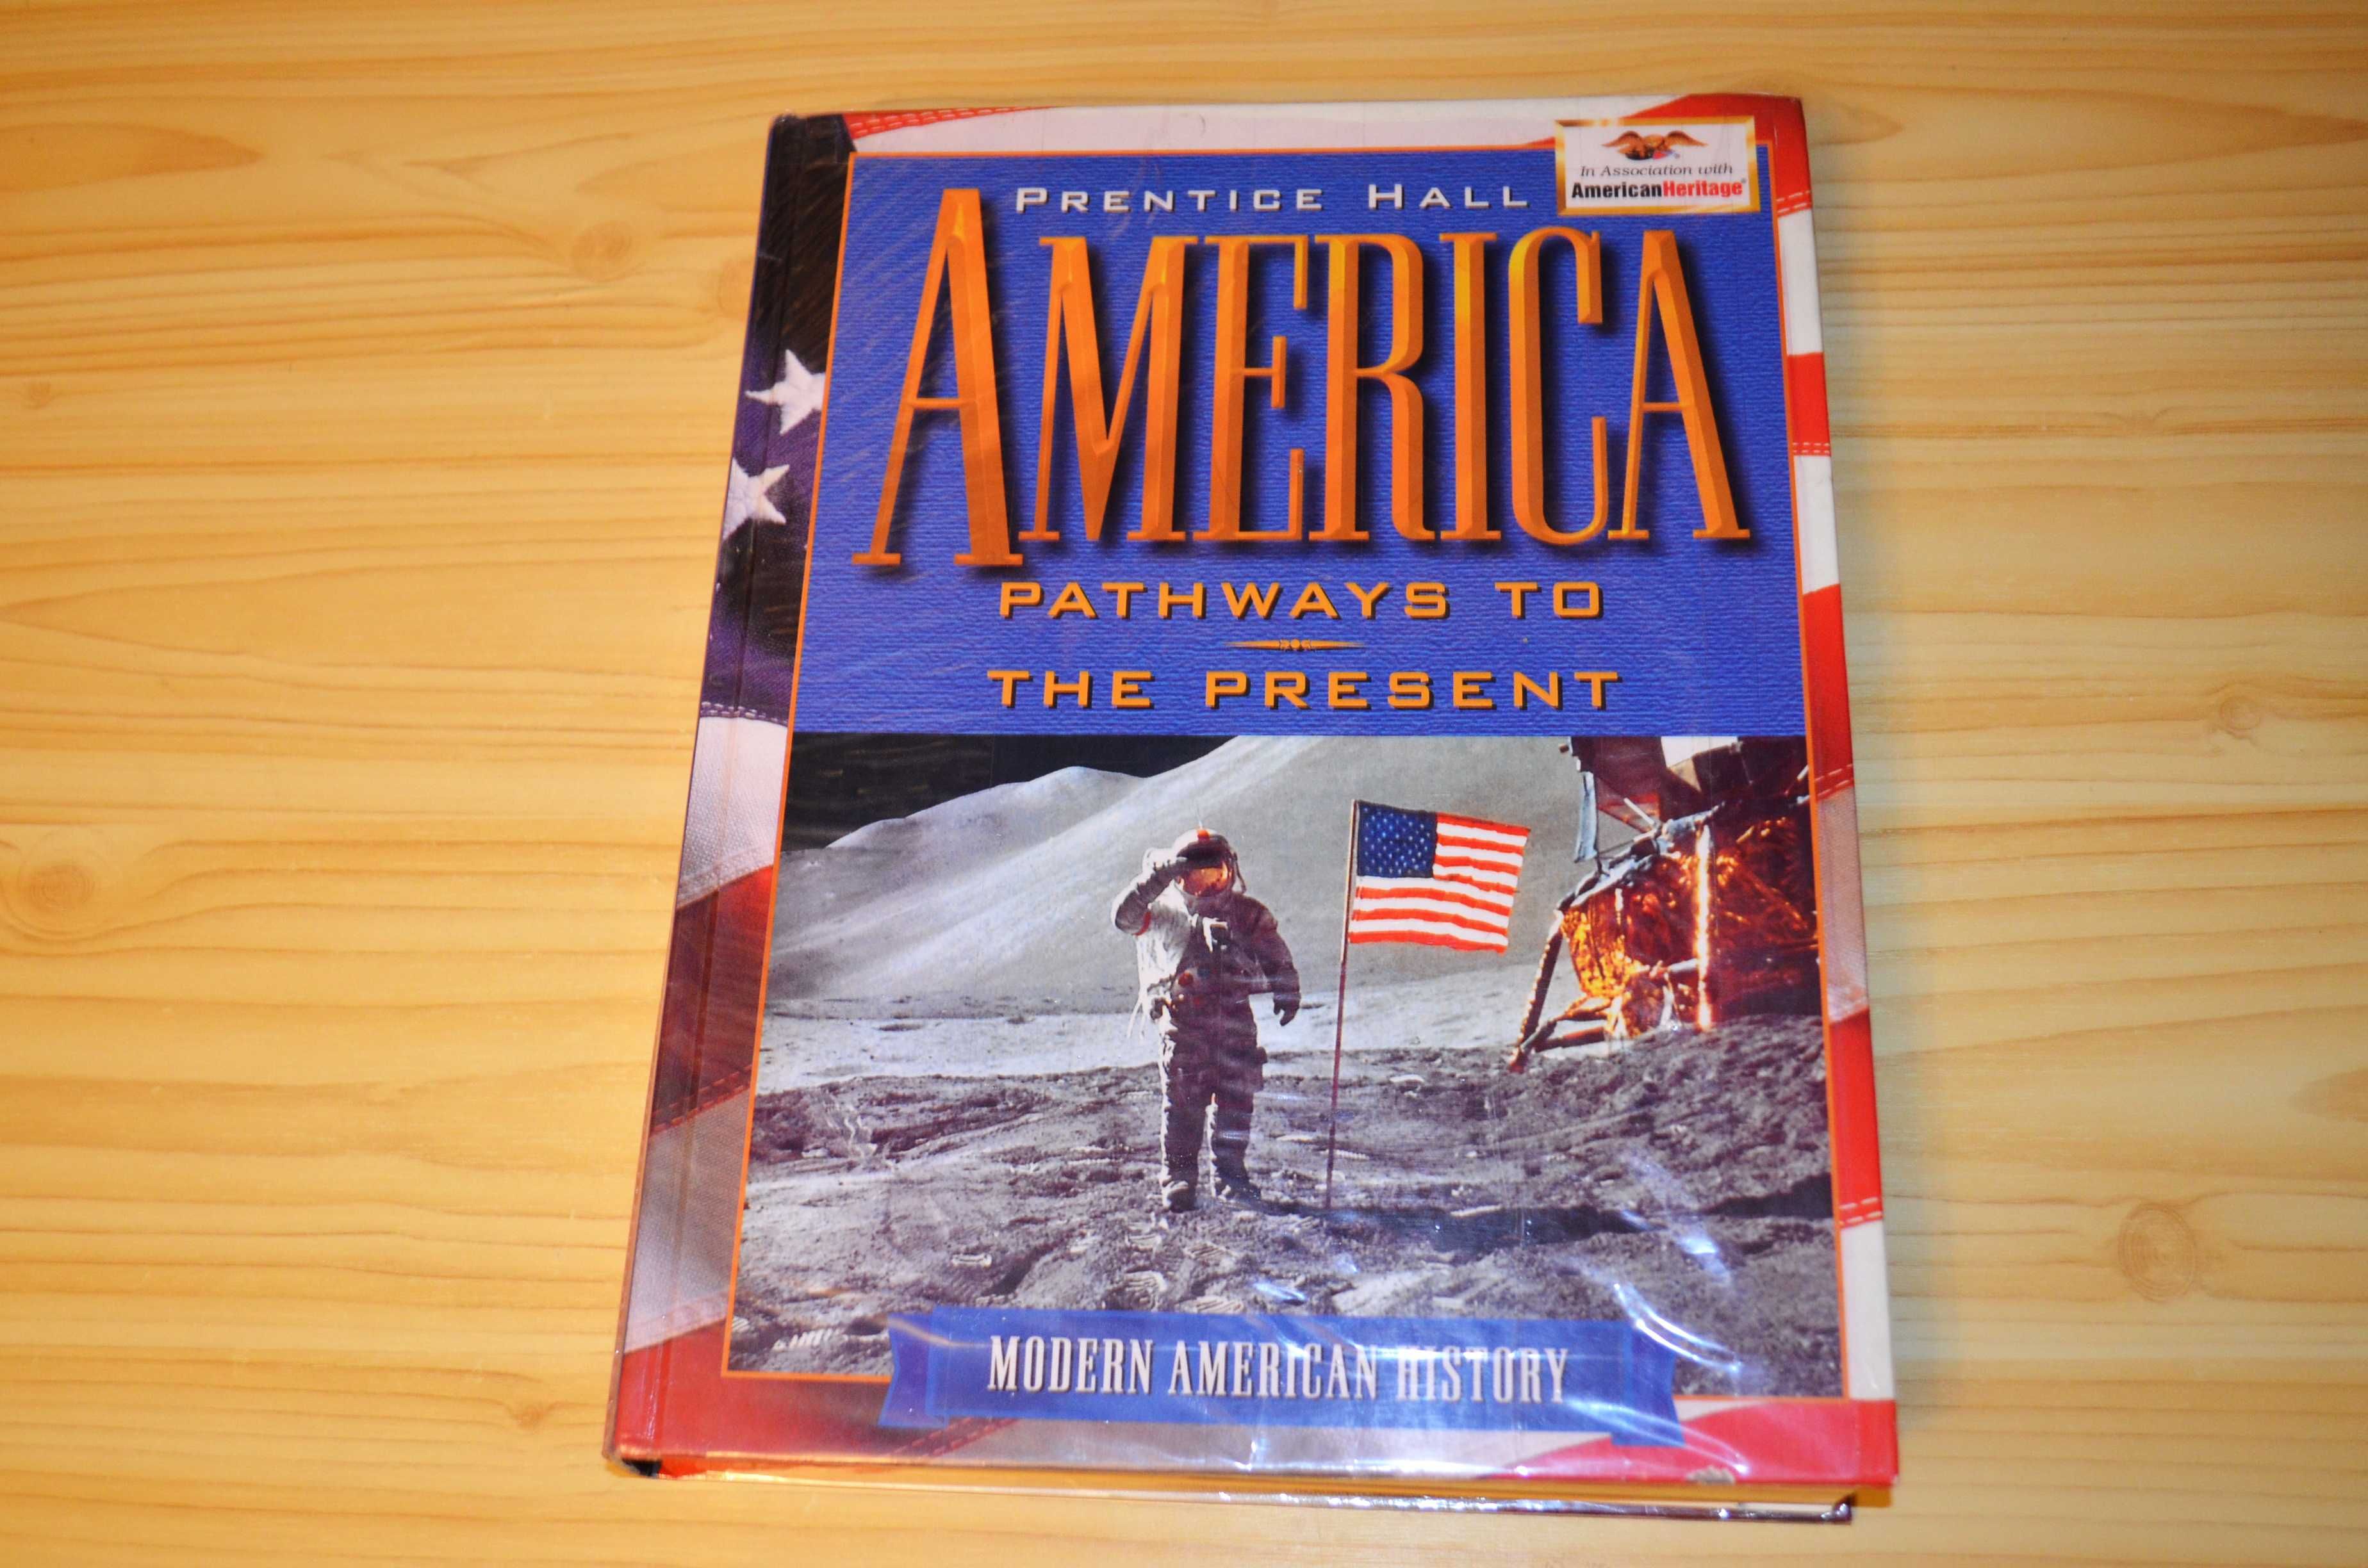 America, учебник по истории америки, книга на английском